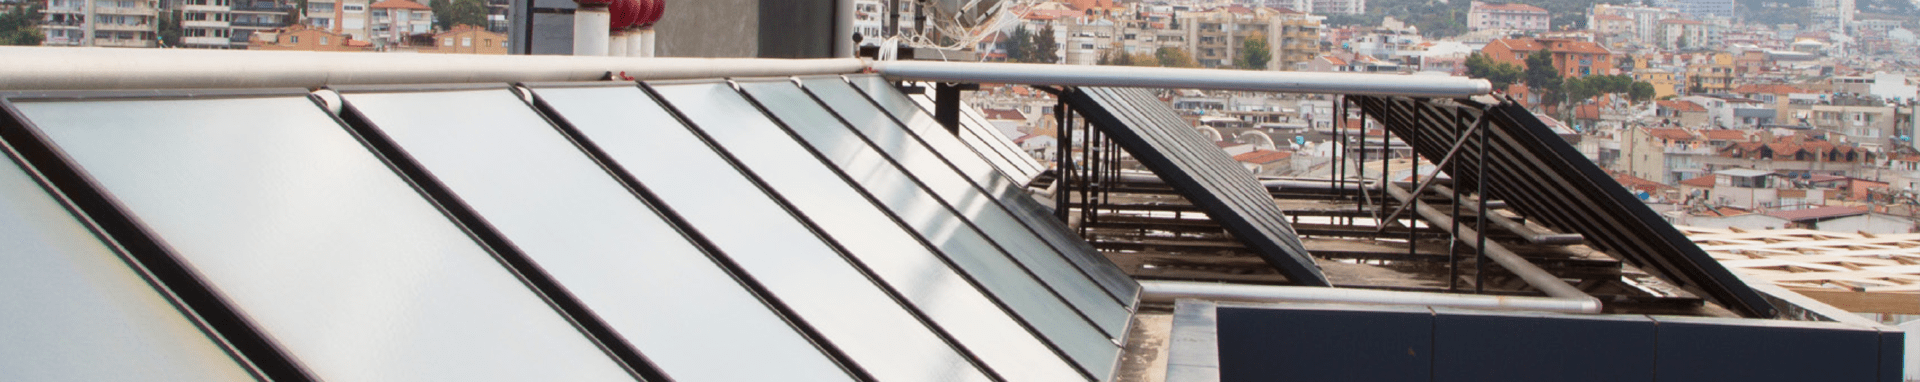 CIF Publishes Case Study Examining Türkiye’s Clean Energy Transformation